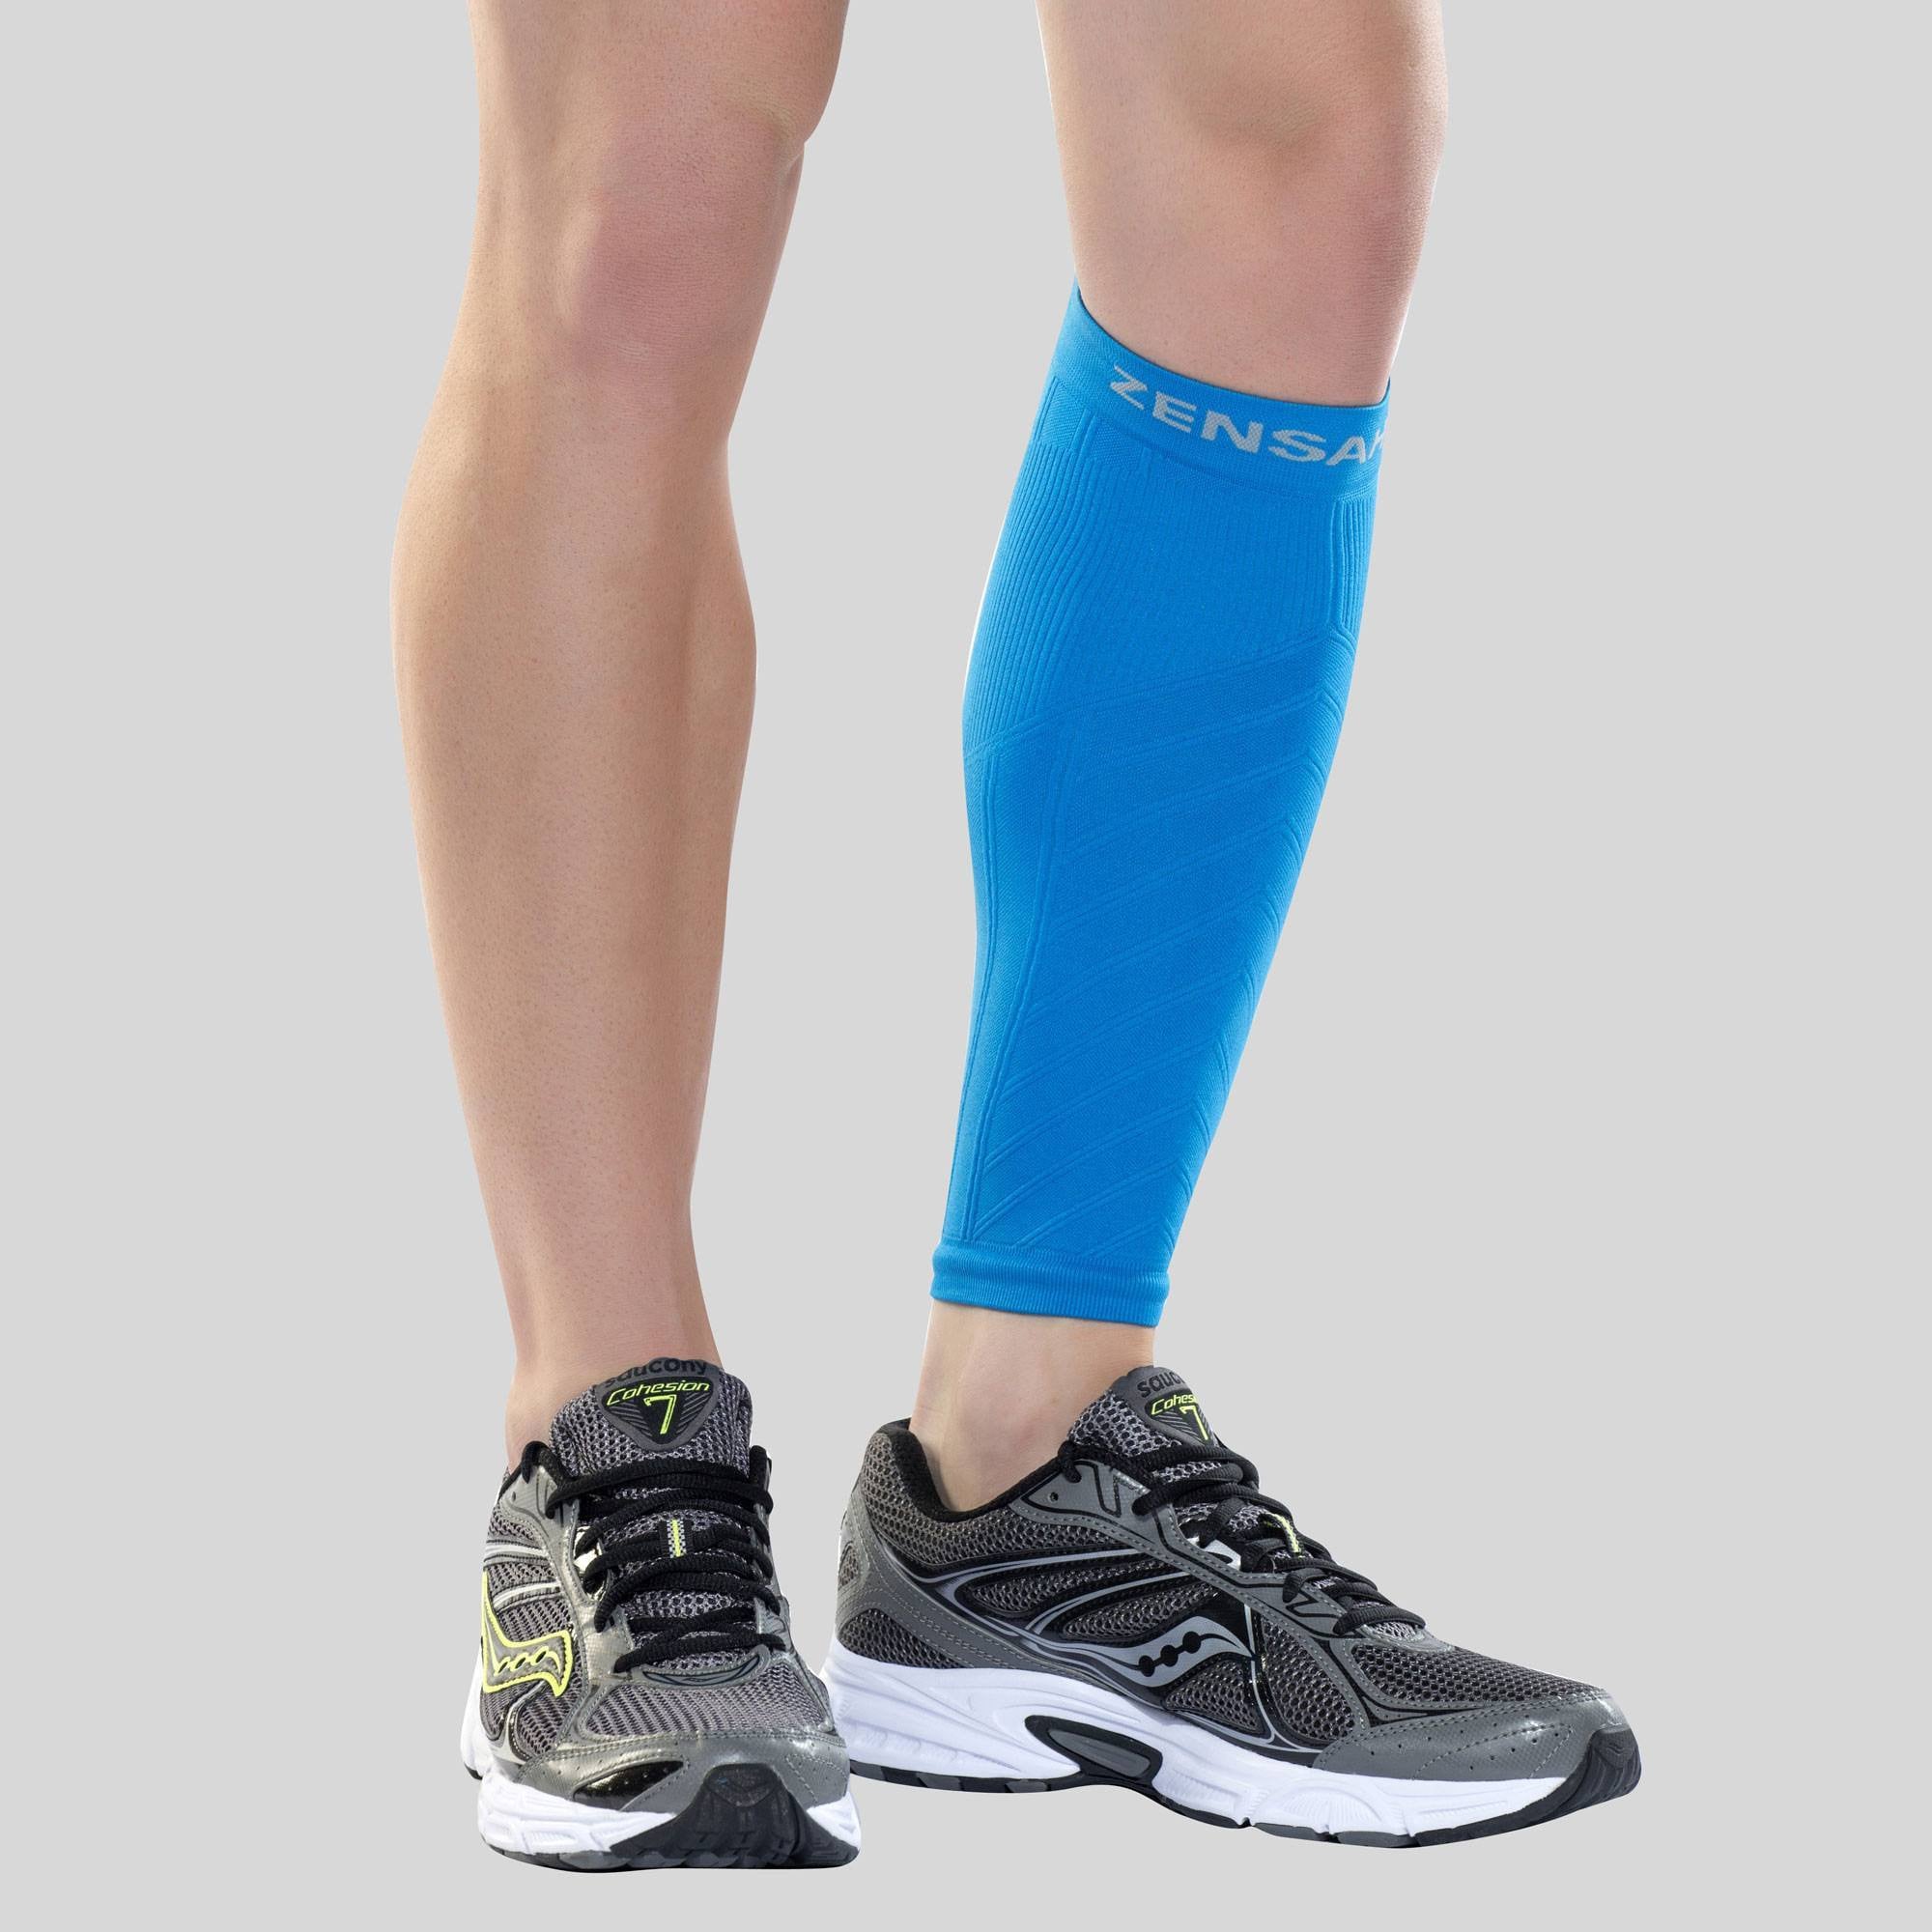 DPTALR Calf Compression Sleeve Leg Compression Socks for Shin Splint, Calf  Pain Relief 